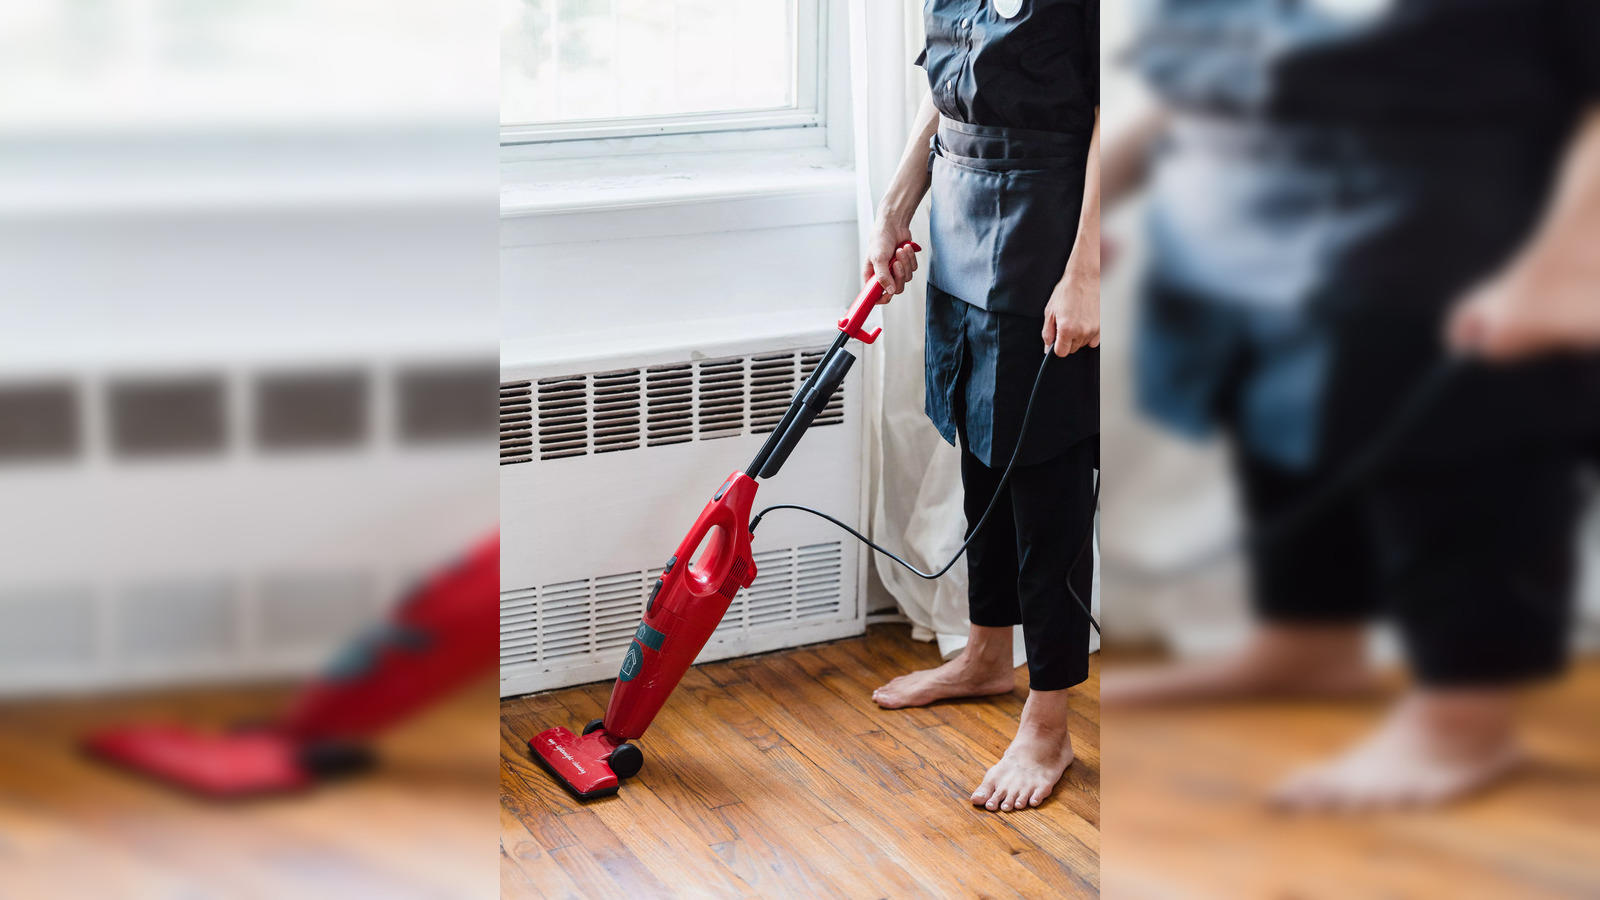 Vacuum Cleaner for Dog Hair Sweeping: Top 5 Models – Agaro